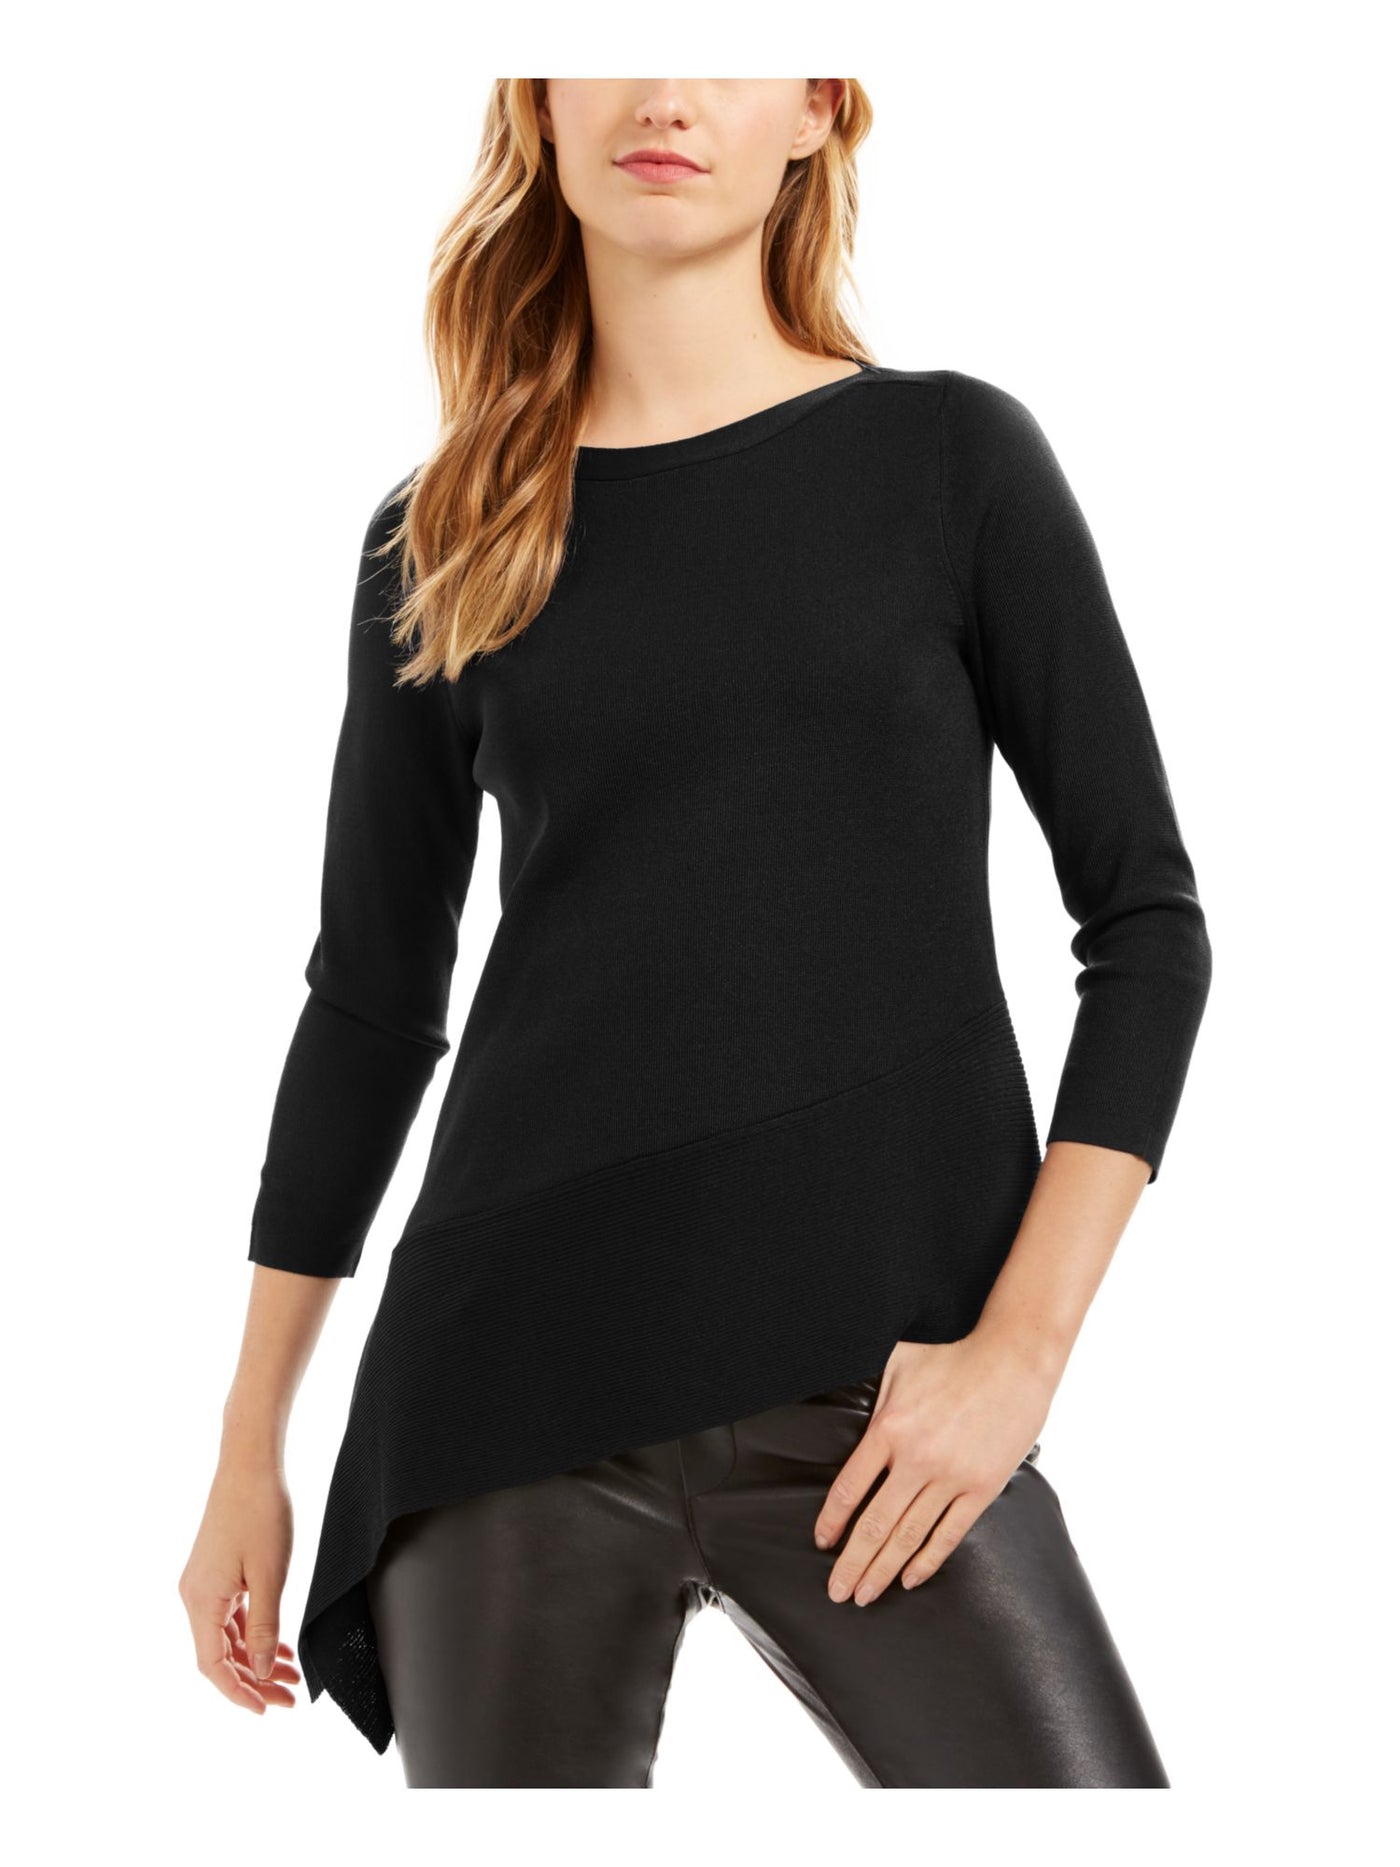 ANNE KLEIN Womens Black 3/4 Sleeve Jewel Neck Sweater S